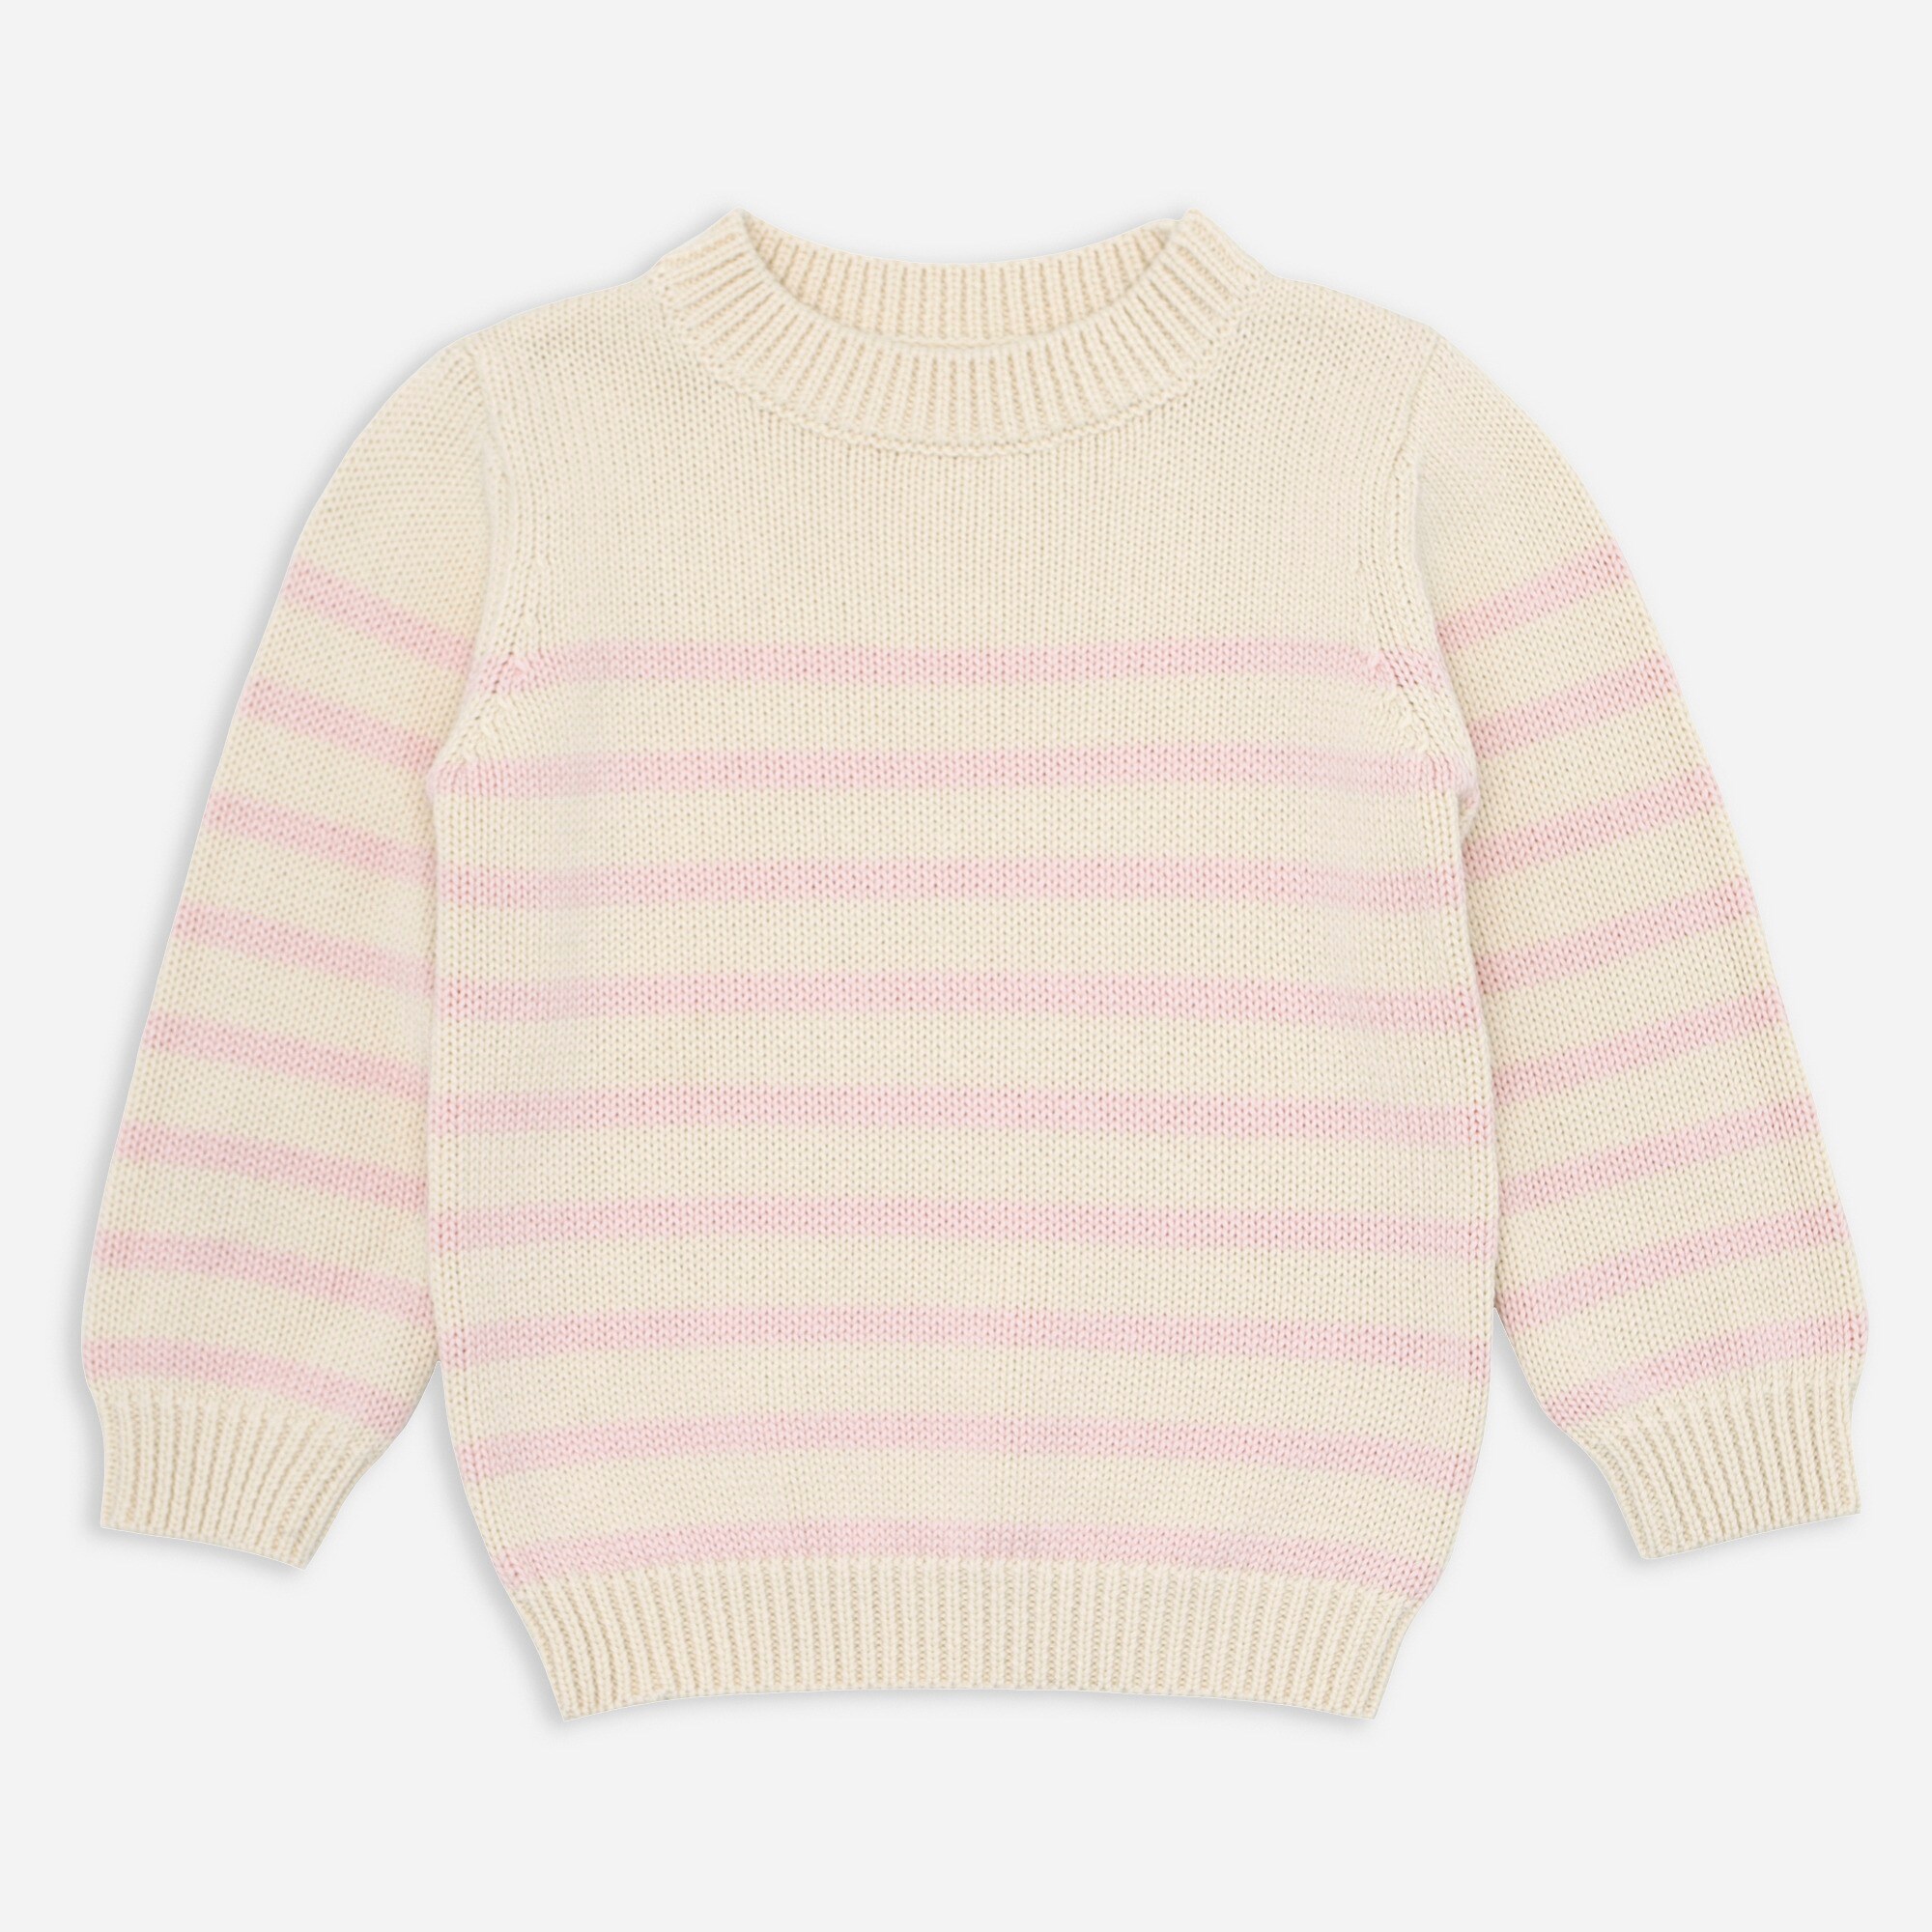  Kids&apos; minnow&trade; striped knit sweater